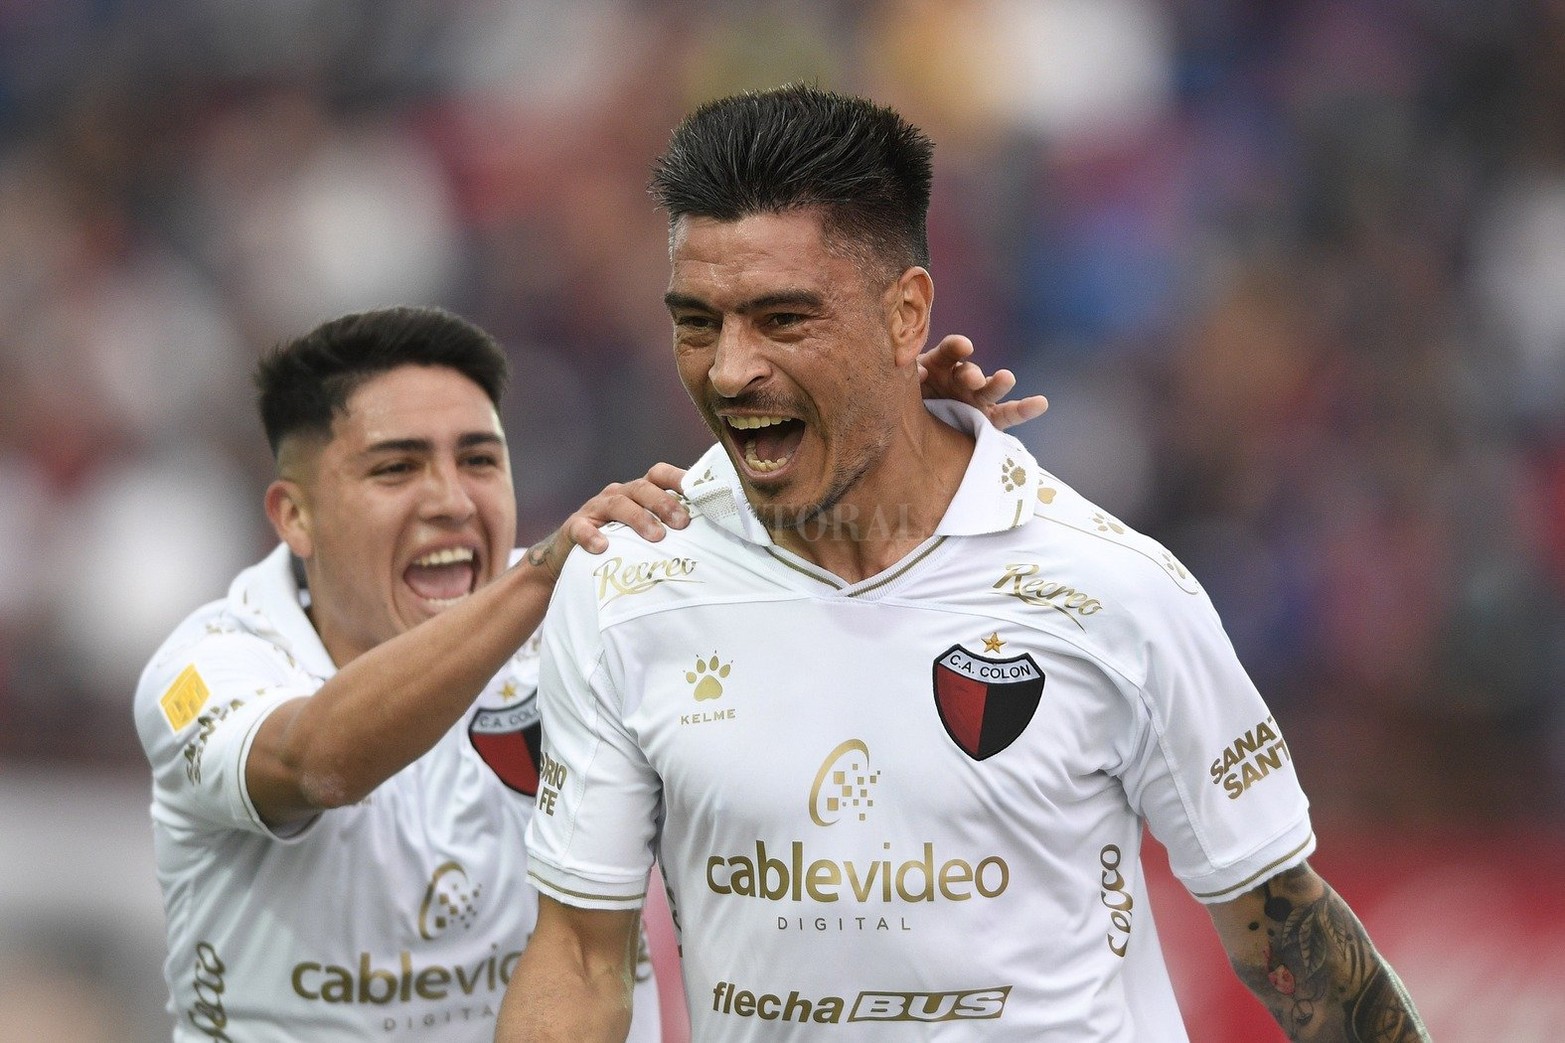 Con goles de Paolo Goltz y Eric Meza, Colón venció a San Lorenzo por la fecha 15 de la Liga Profesional por 2 a 1.